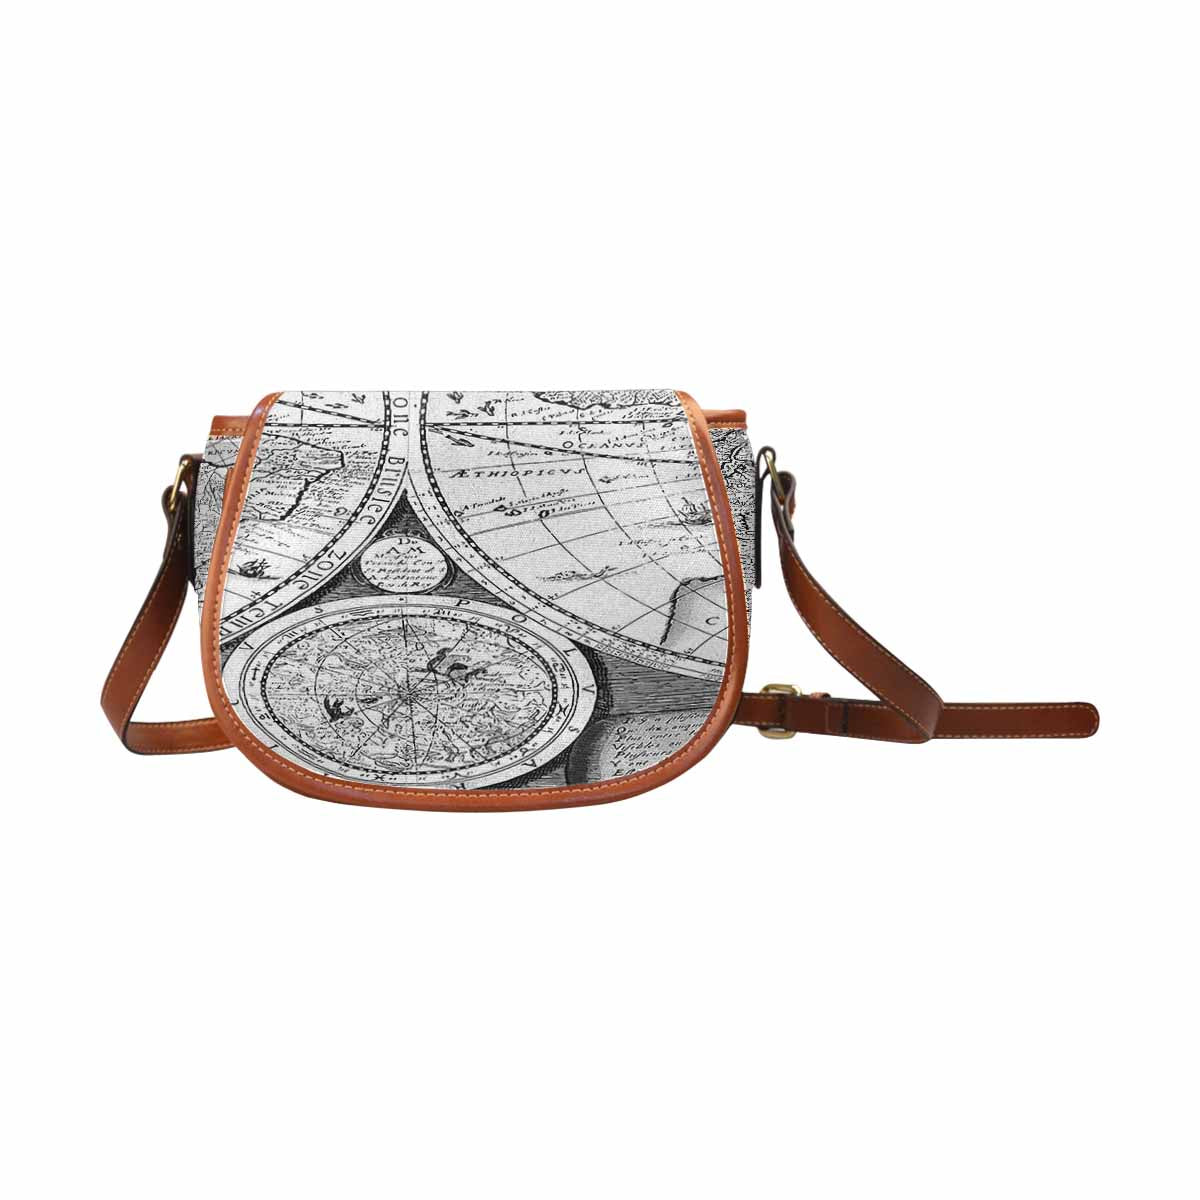 Antique Map design Handbag, saddle bag, Design 29